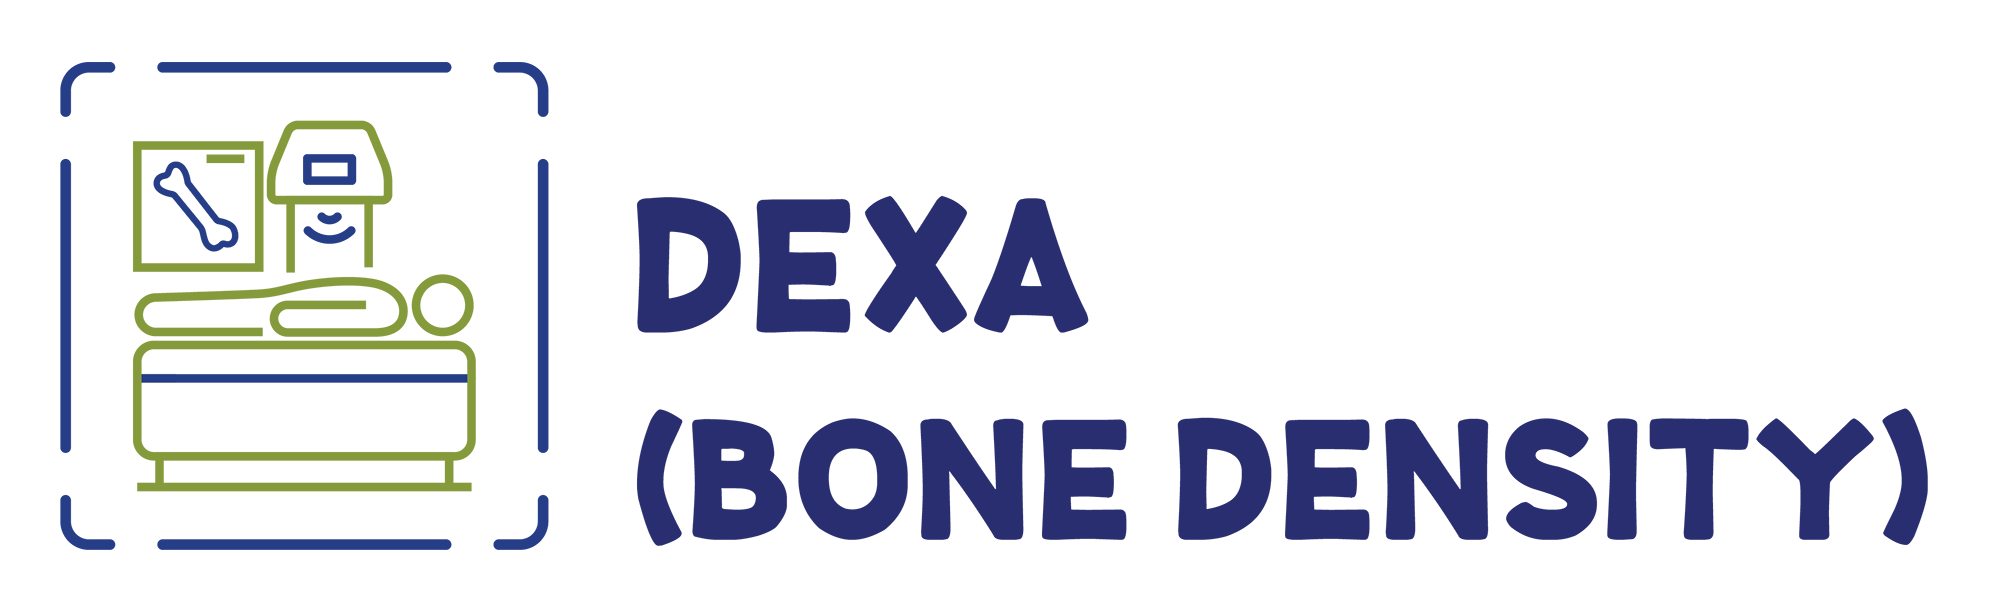 DEXA | Bone Densitometry, Delaware Imaging Network